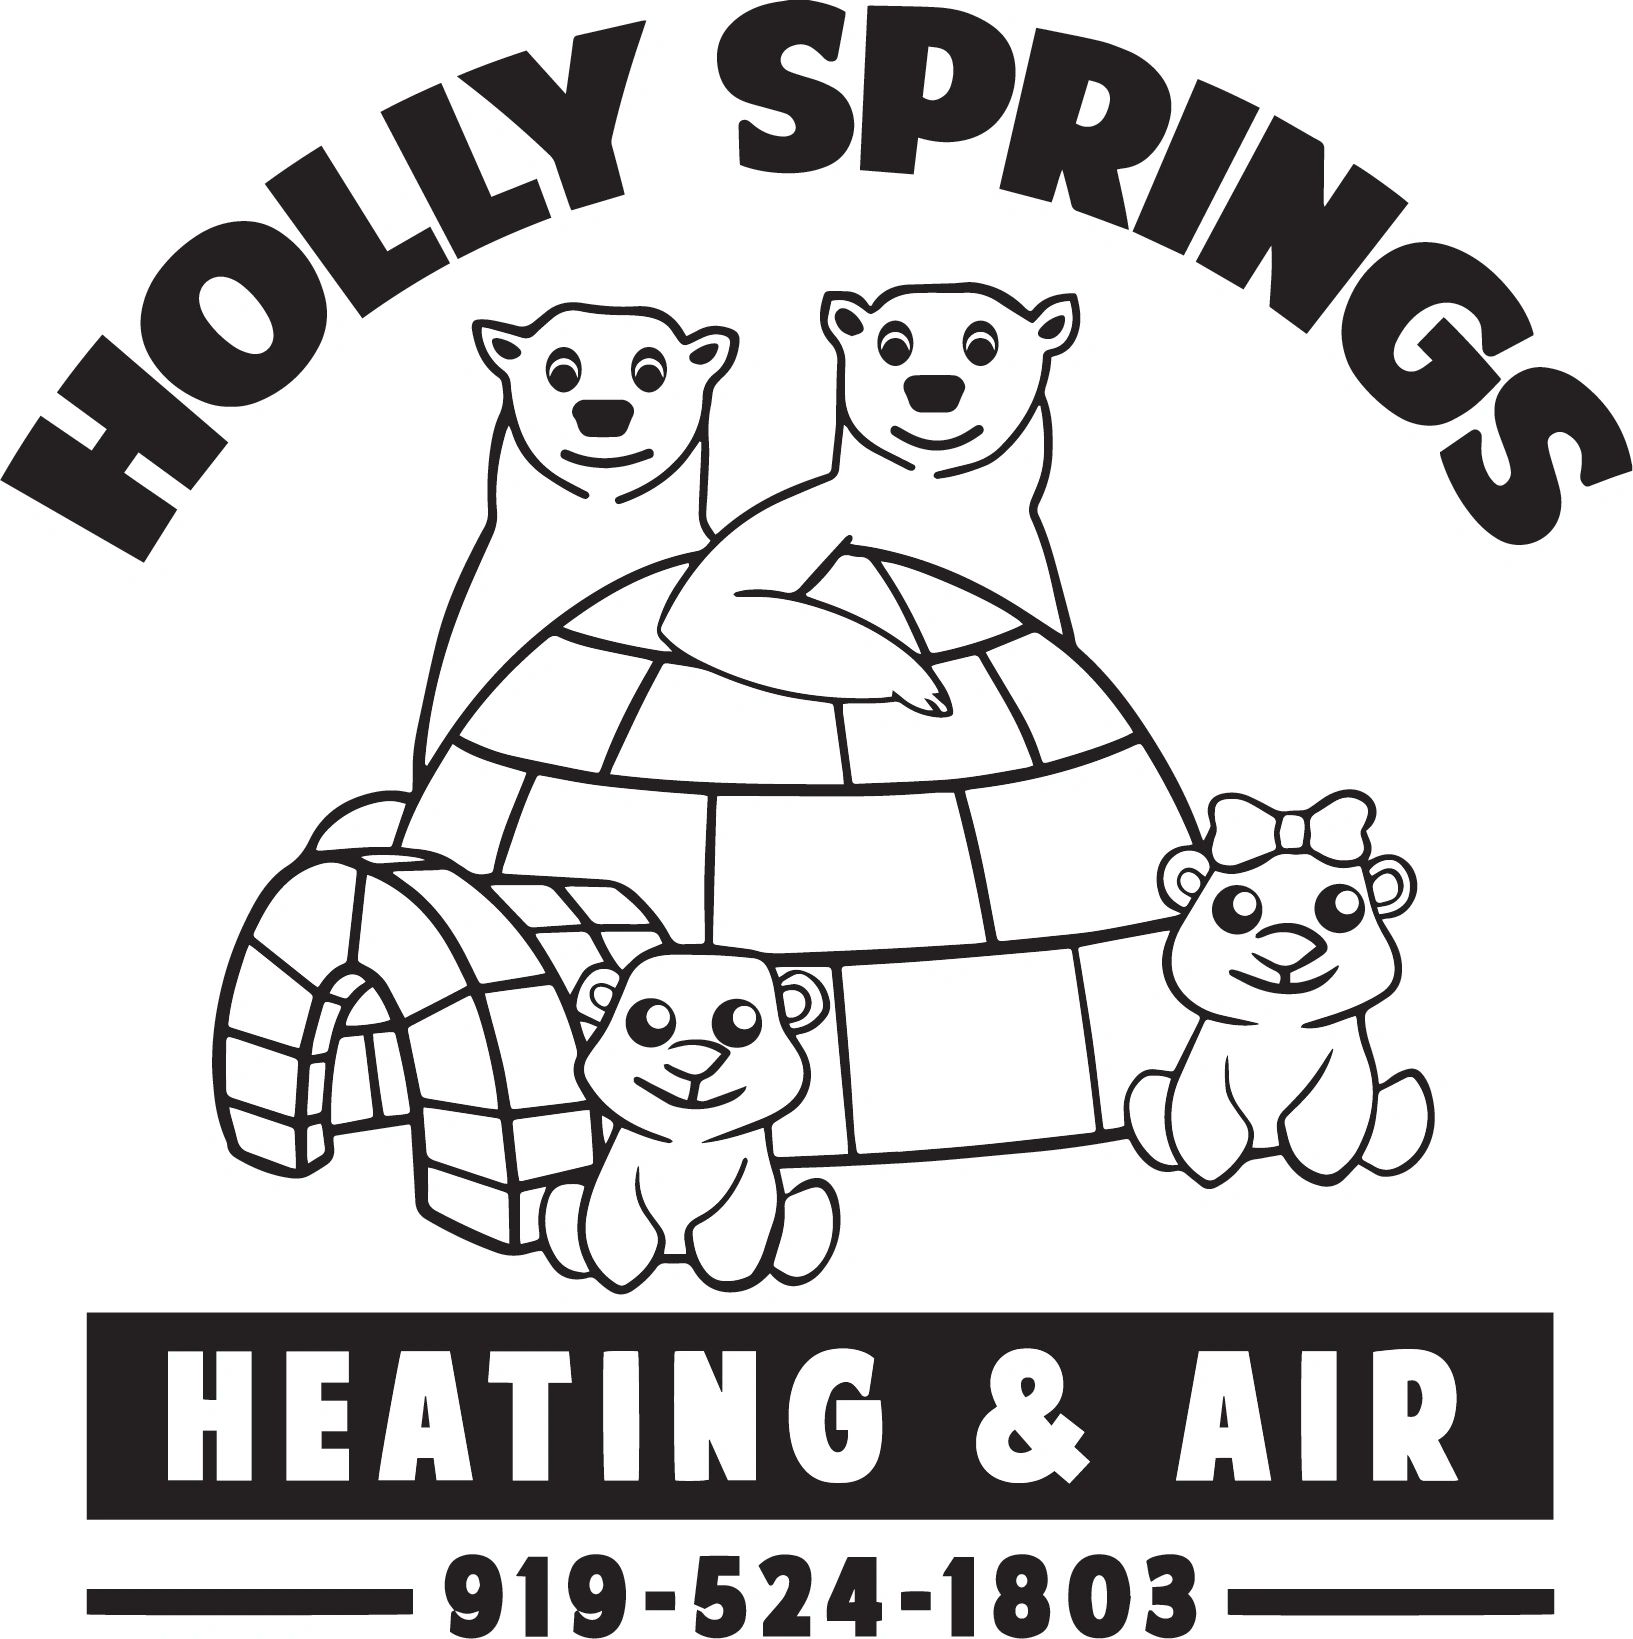 Holly springs heating and air ac in Holly Springs, North Carolina